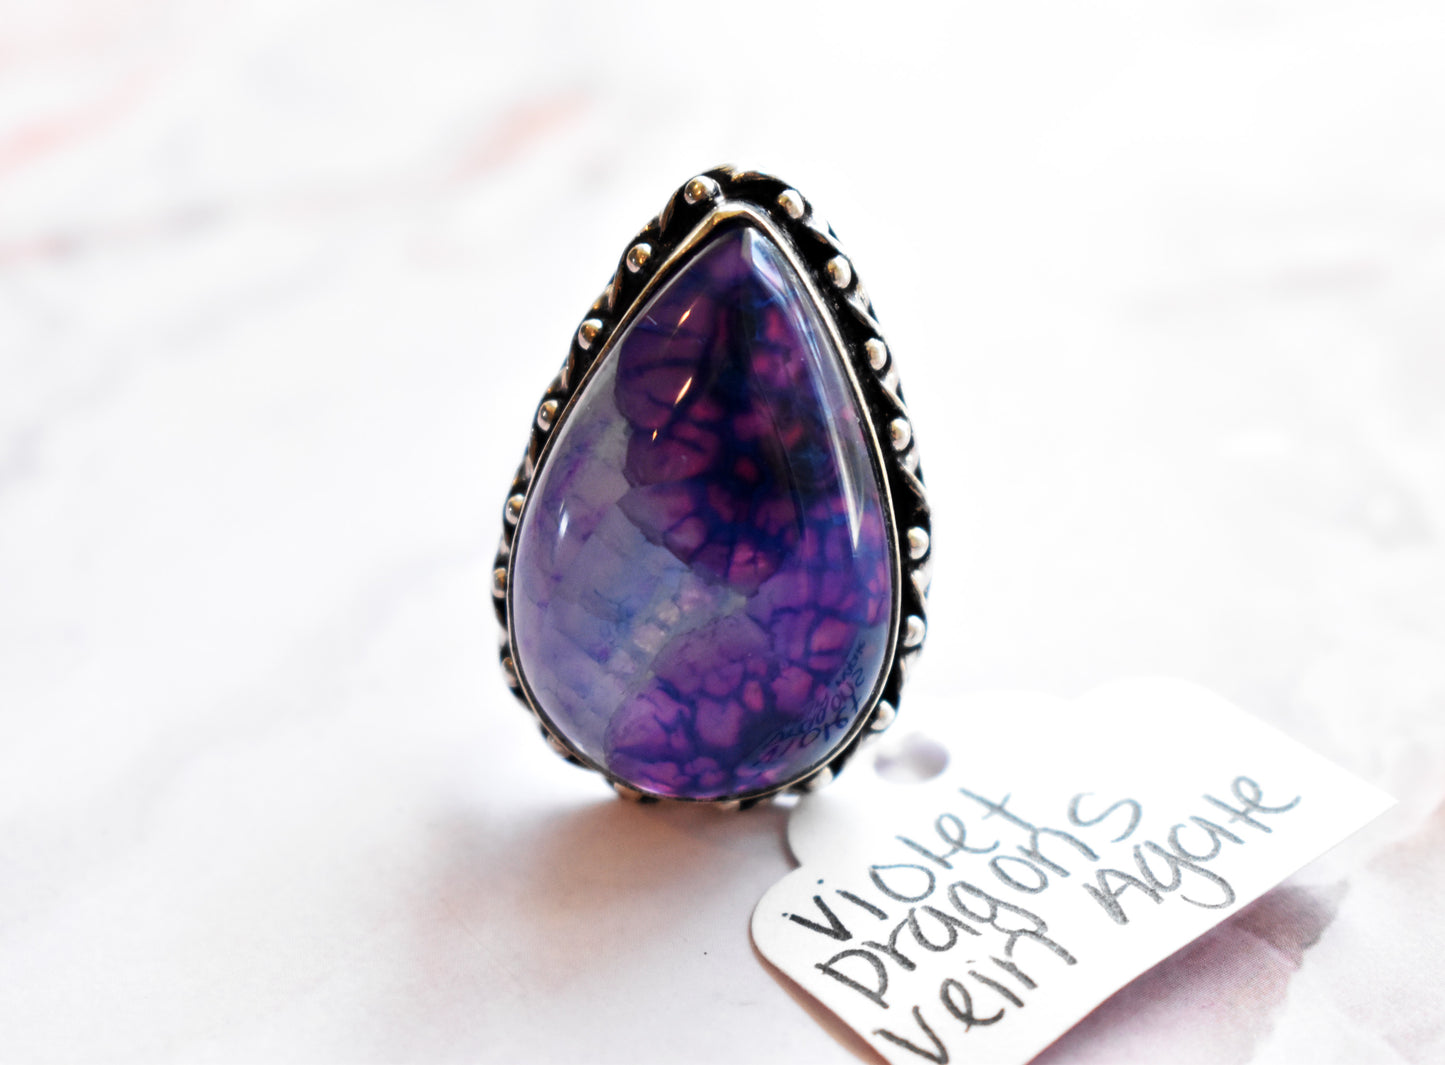 stones-of-transformation - Violet Dragon's Vein Agate (Size 8.5) - Stones of Transformation - 